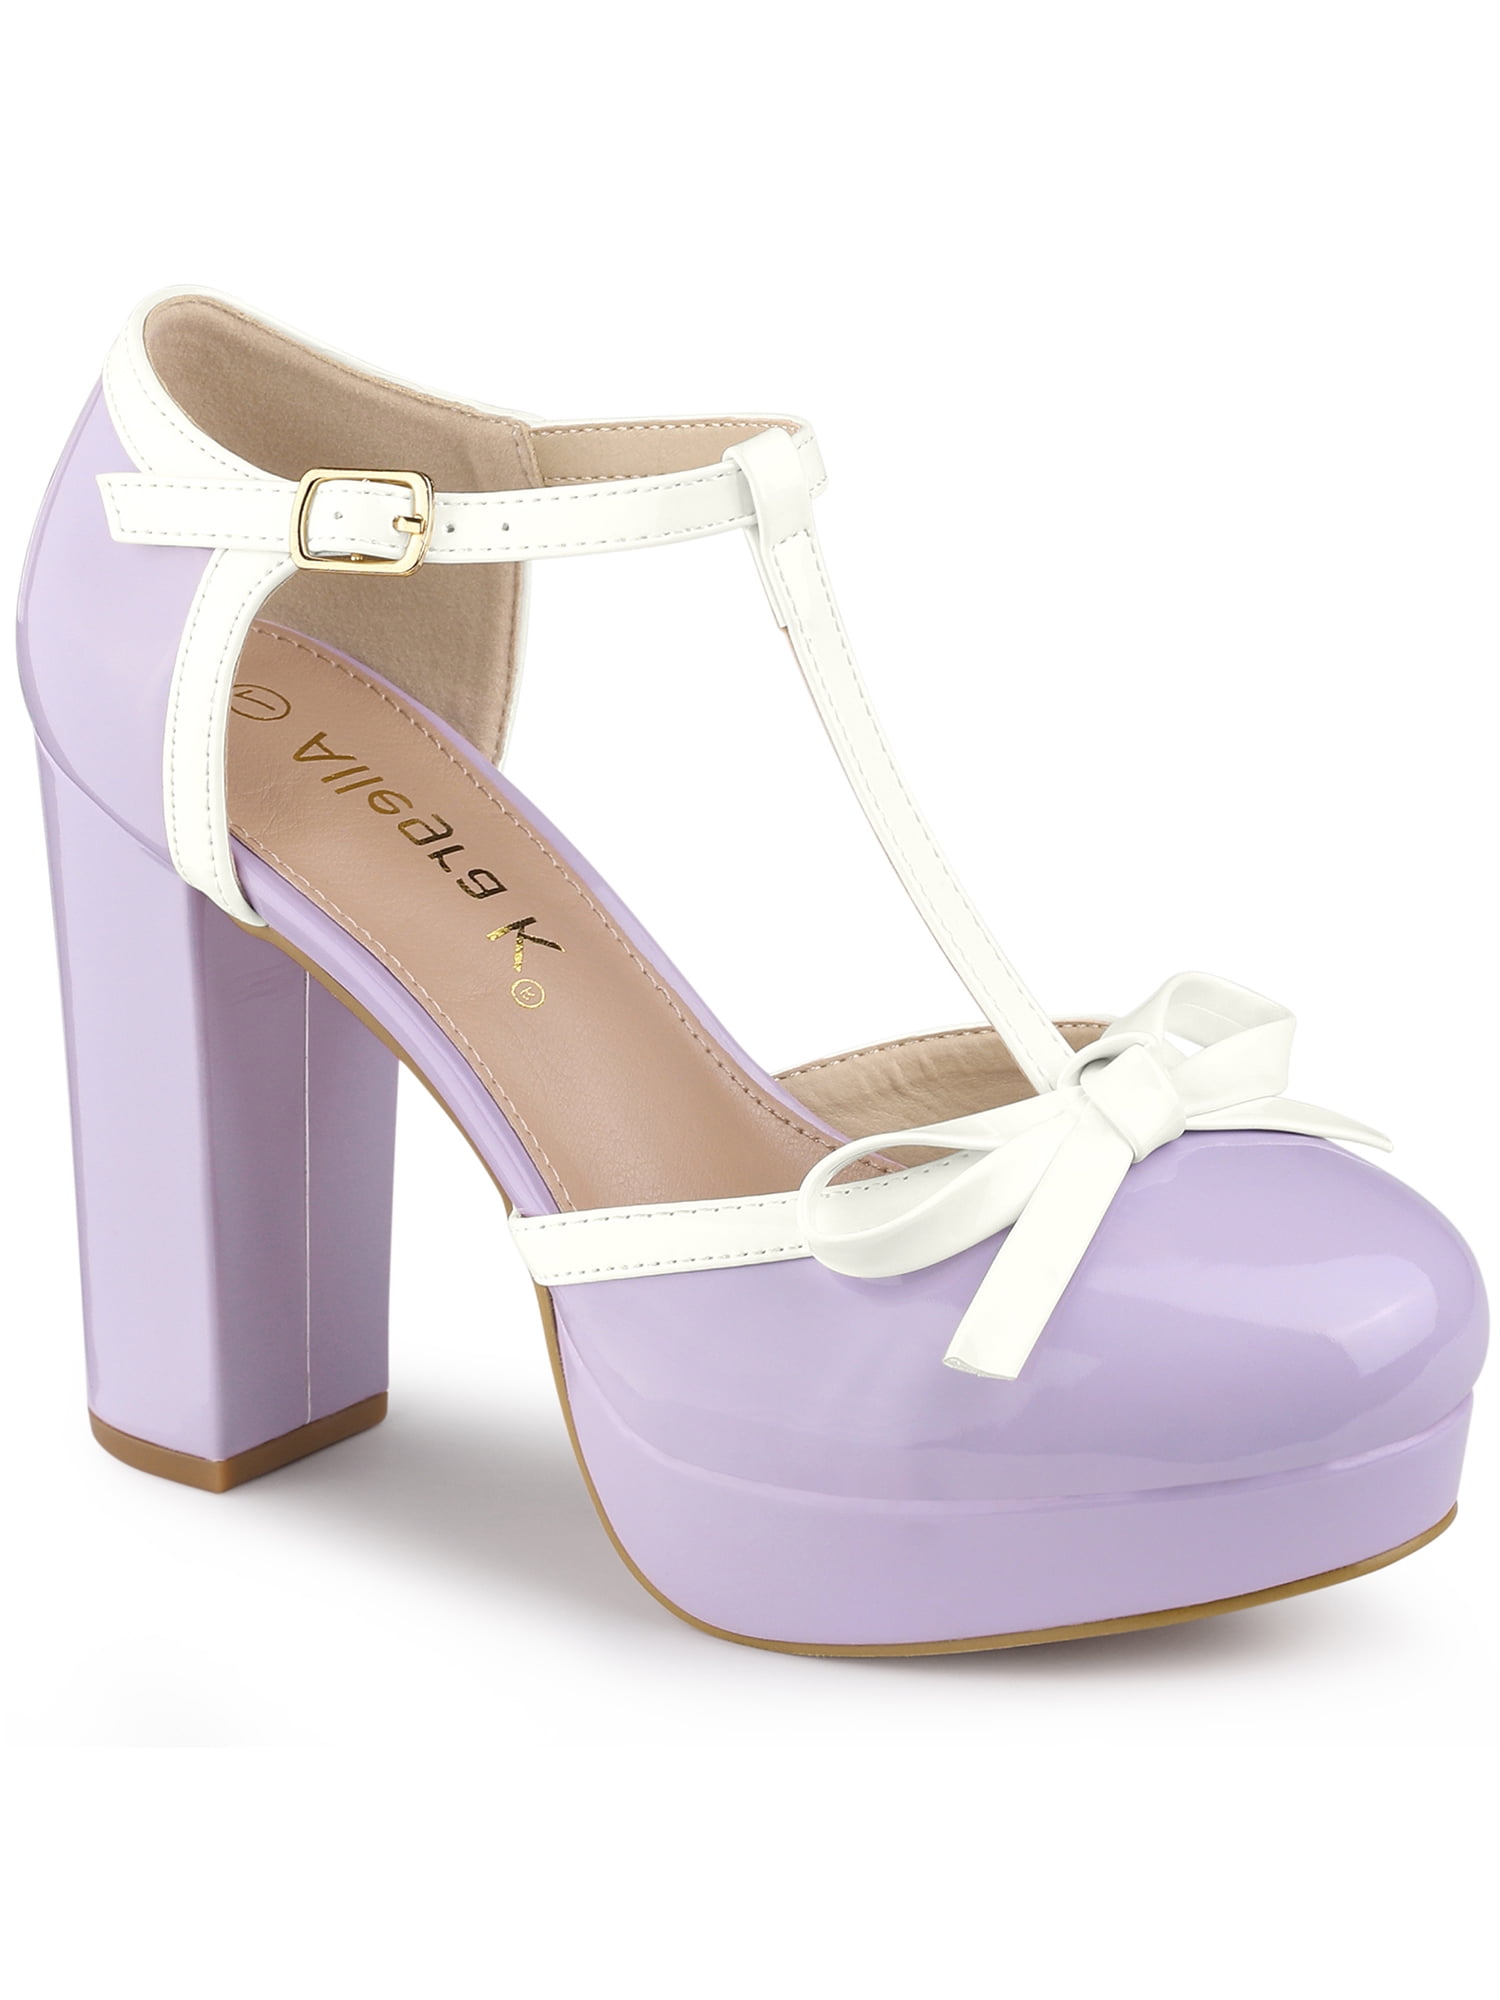 White High Heel Sandals - Platform Sandals - Ankle Strap Heels - Lulus